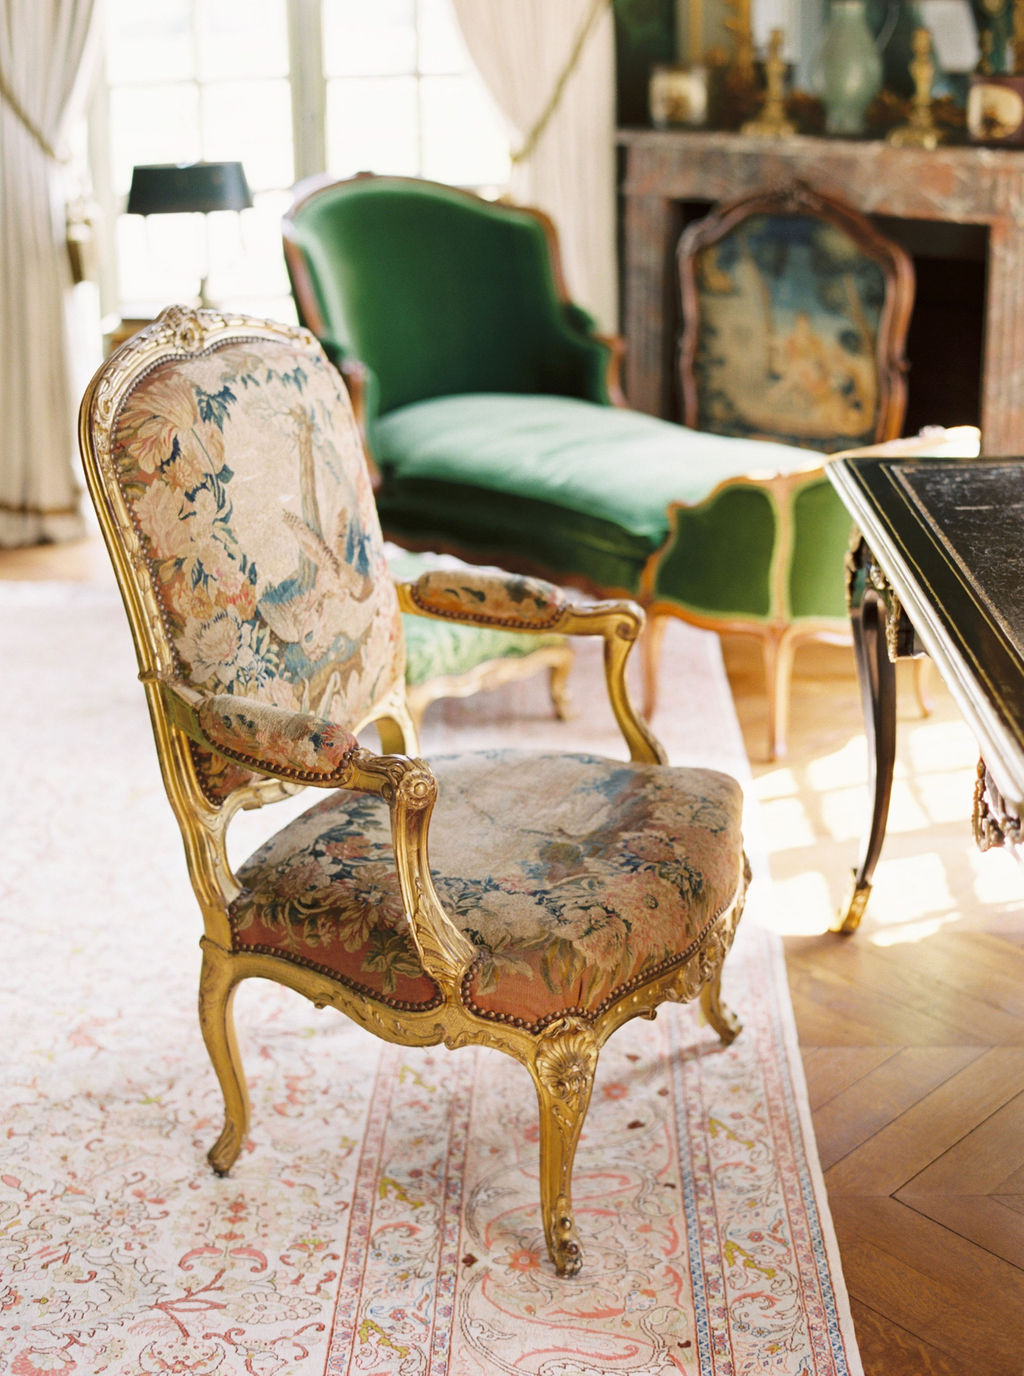 travellur_photoshoot__elegance_Jardin_de_Chateau_de_Villette_interiors_upholstery_gold_luxe.jpg